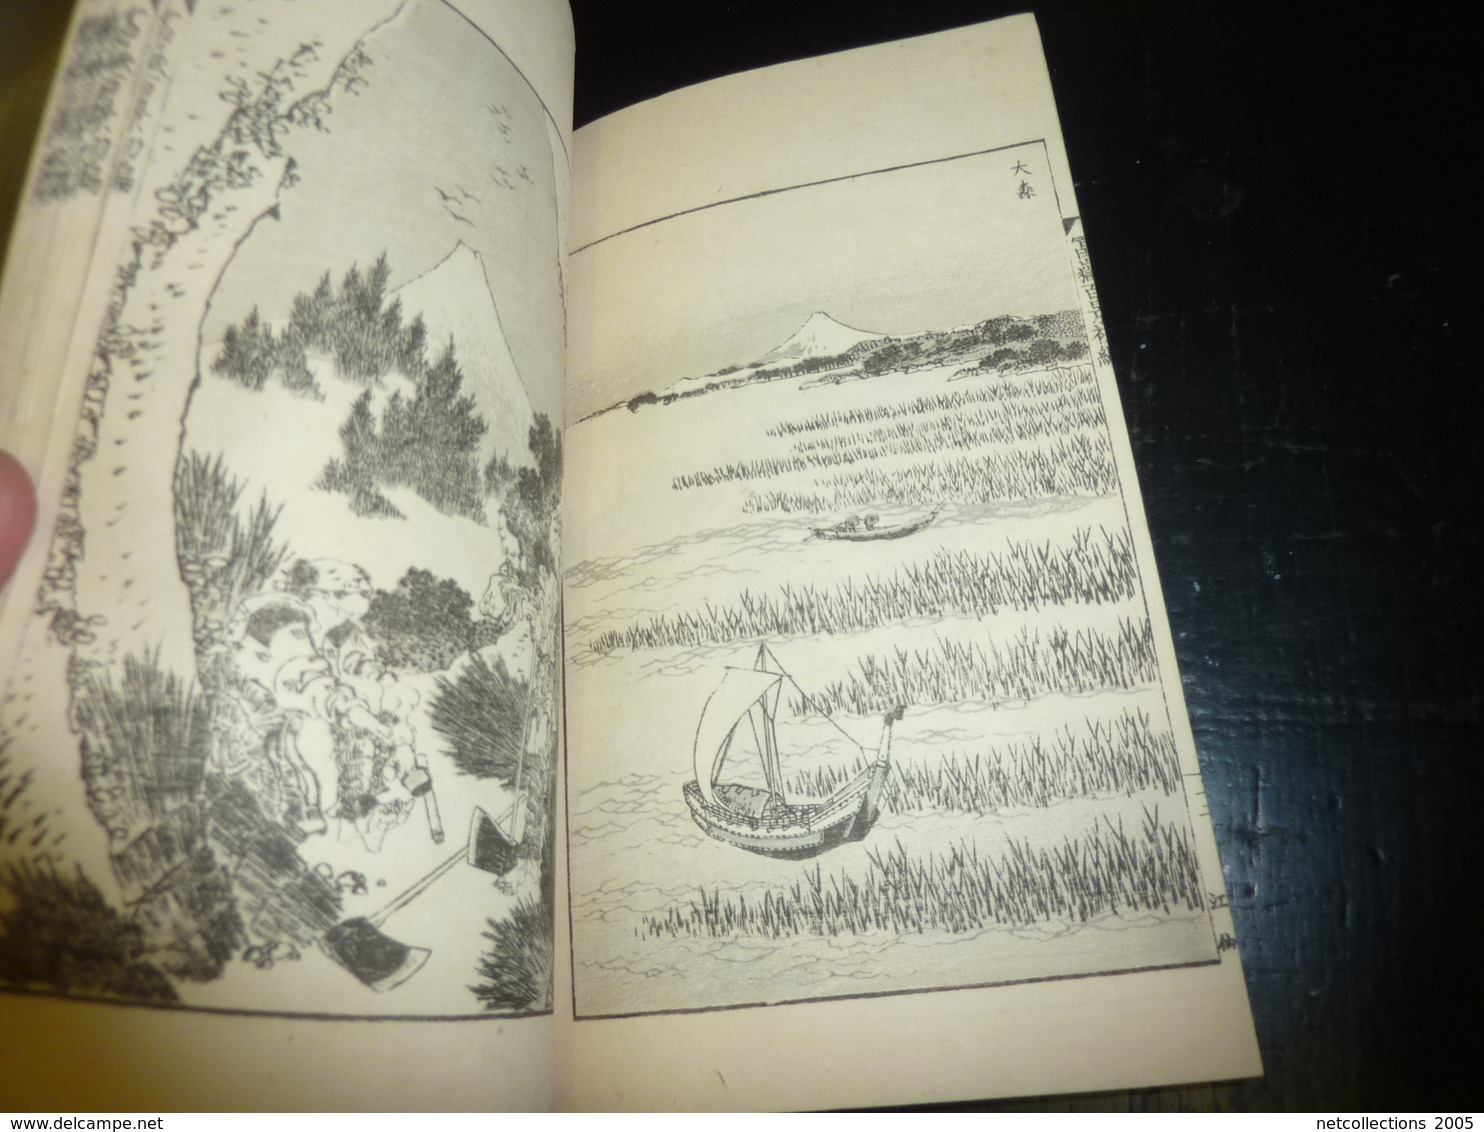 LIVRE ANCIEN JAPONAIS ESTAMPES LITHOGRAPHIES GRAVURES 04 - JAPANESE OLD BOOK ILLUSTRATION